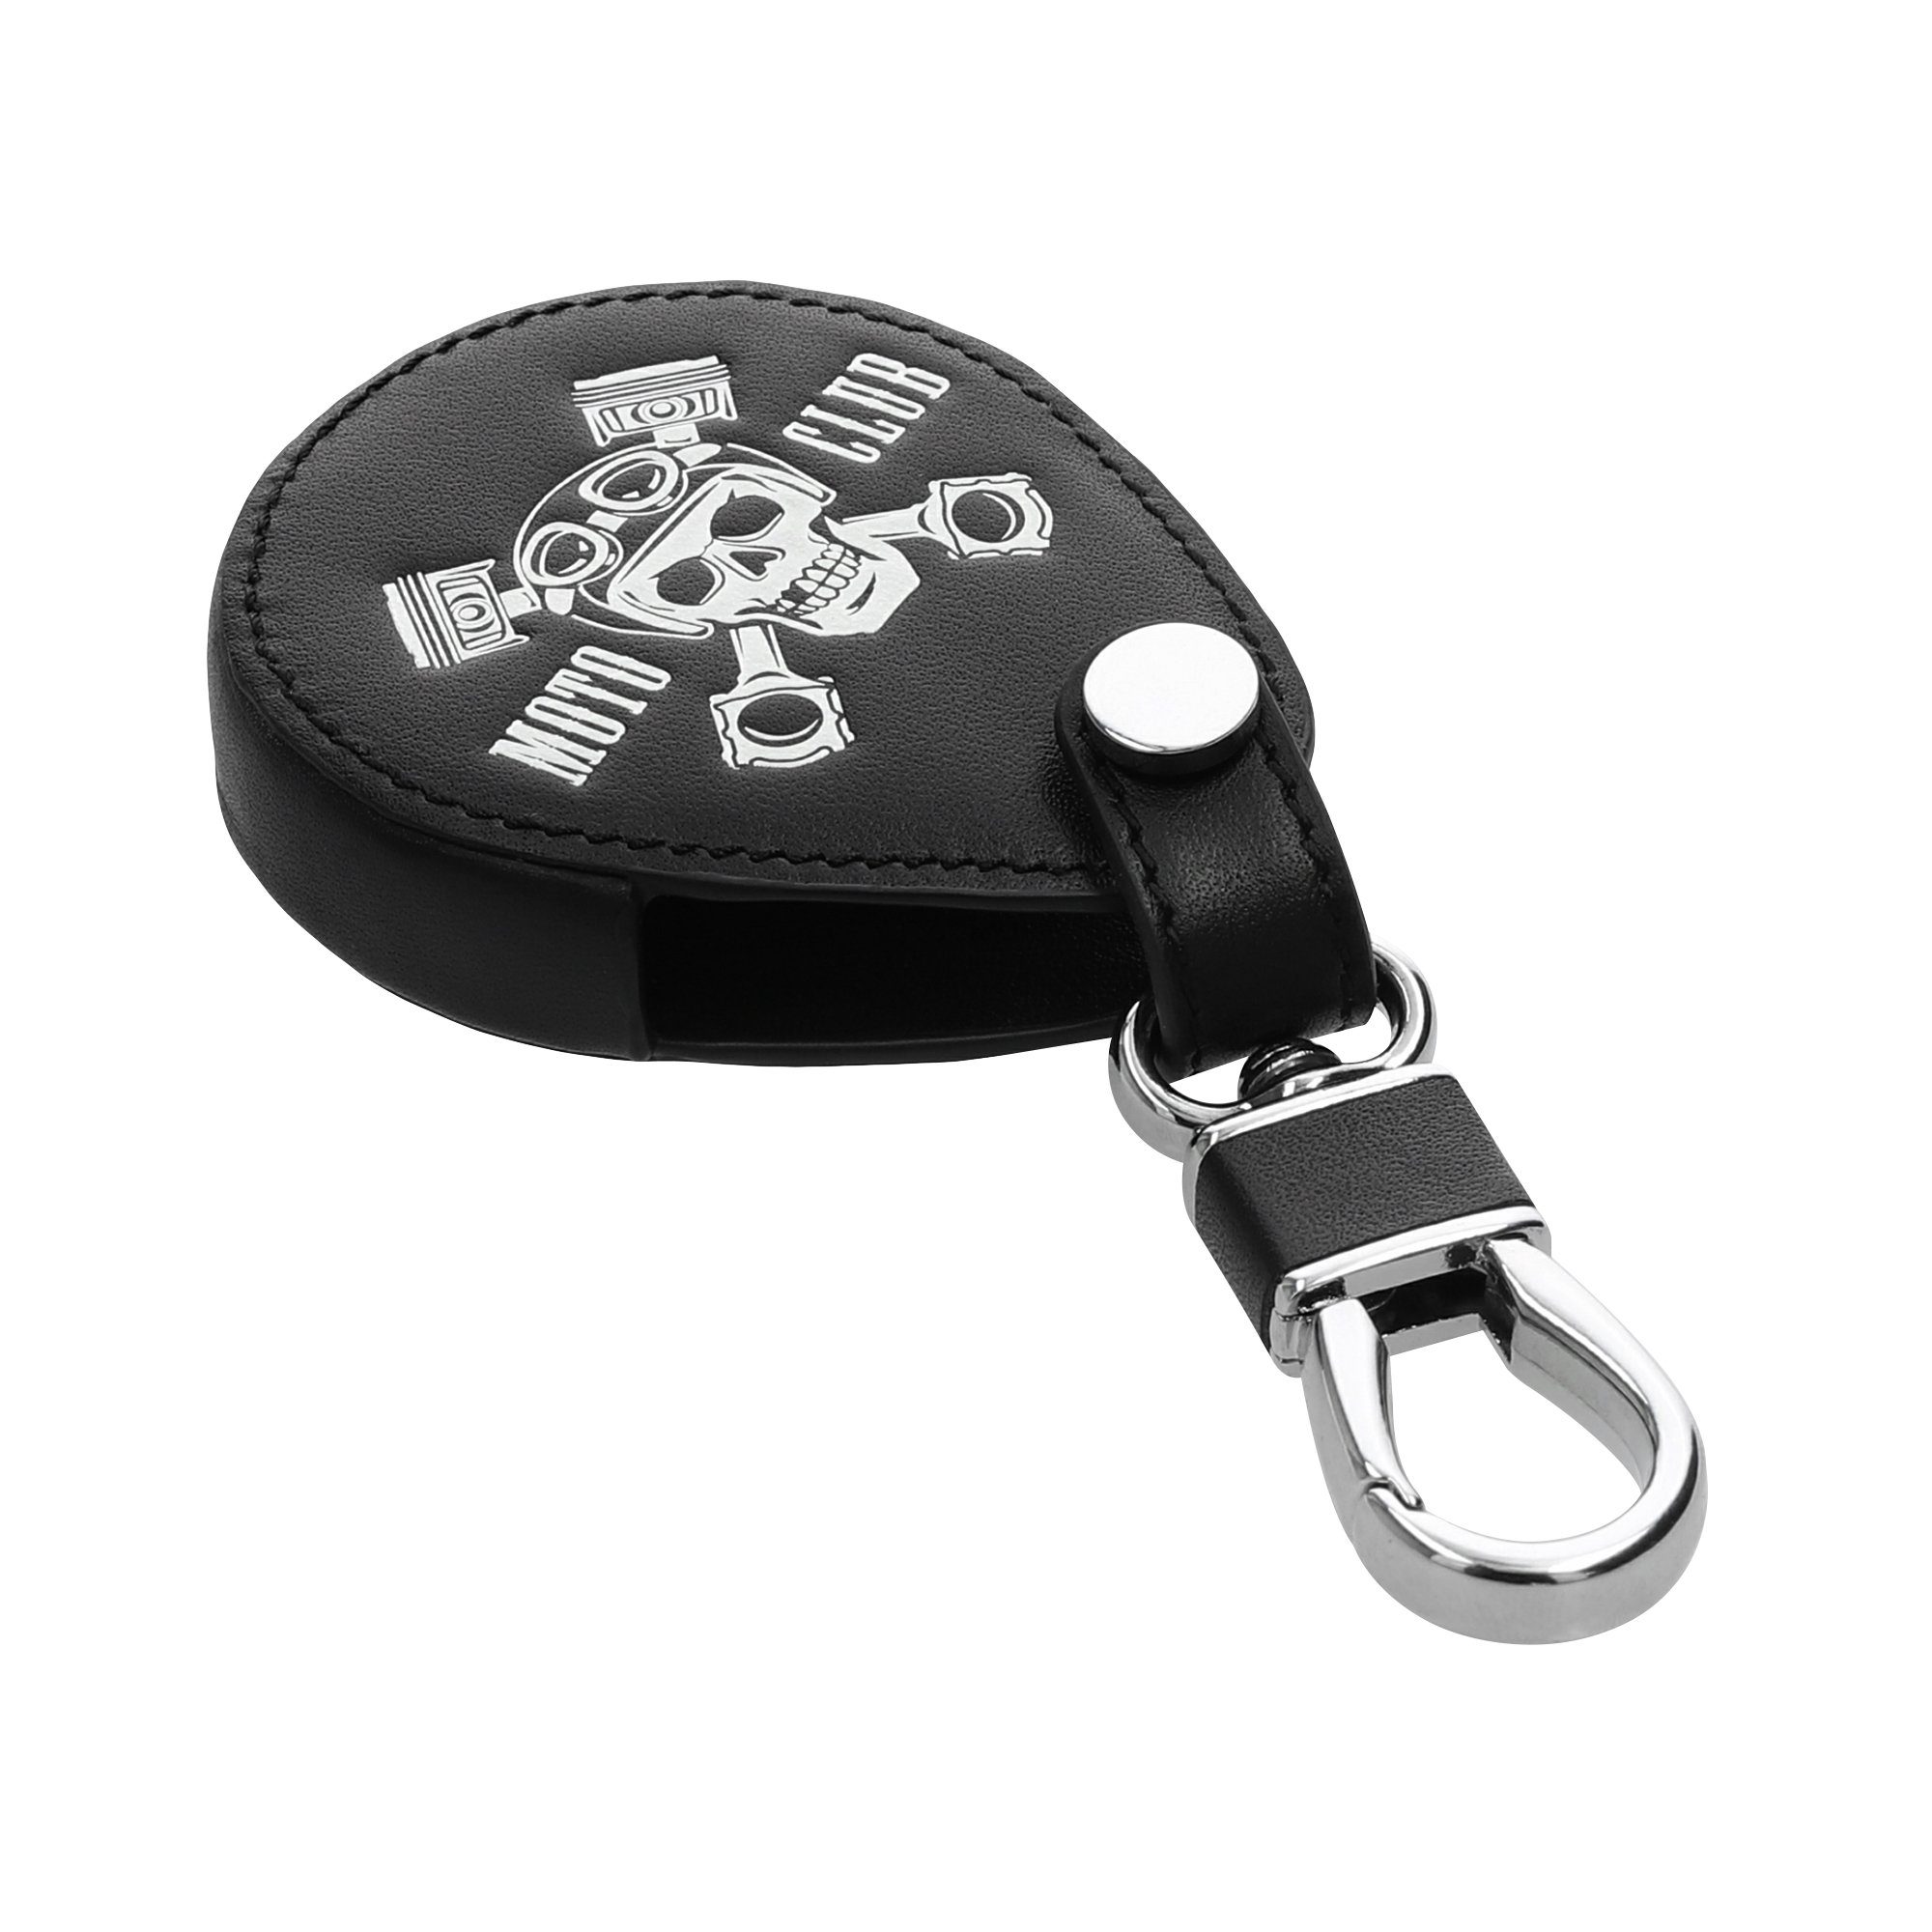 für, kwmobile Kunstleder Hülle Autoschlüssel Schlüsselhülle Schlüsseltasche Schutzhülle Cover